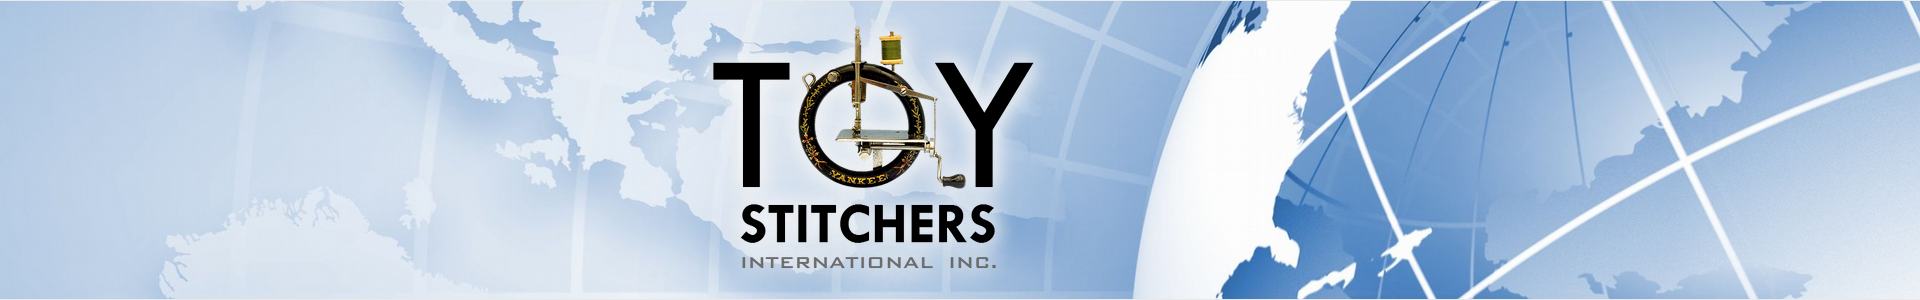 Toy Stitchers International, Inc. - Membership